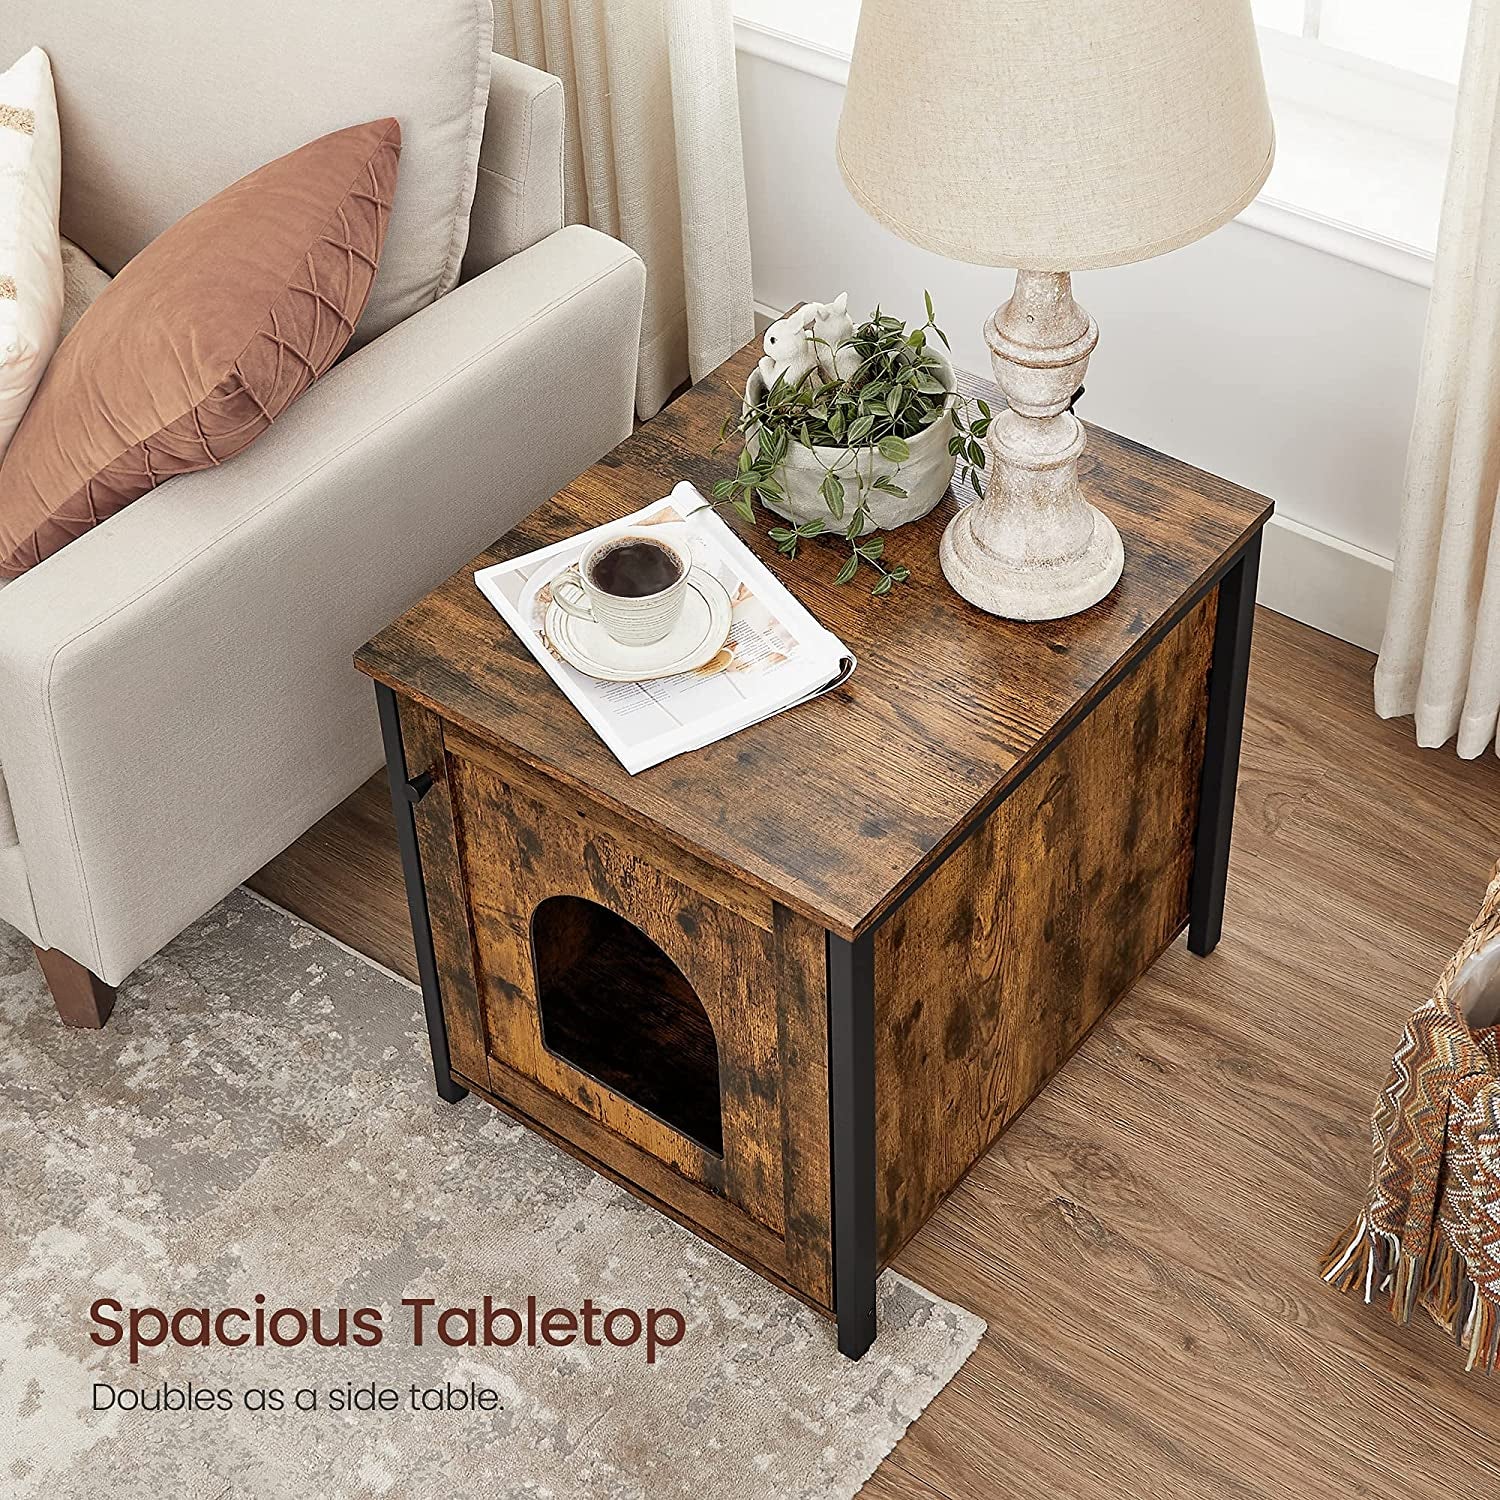 VASAGLE Cat Litter Box Furniture,Hidden Litter Box Enclosure Cabinet,Rustic Brown and Black